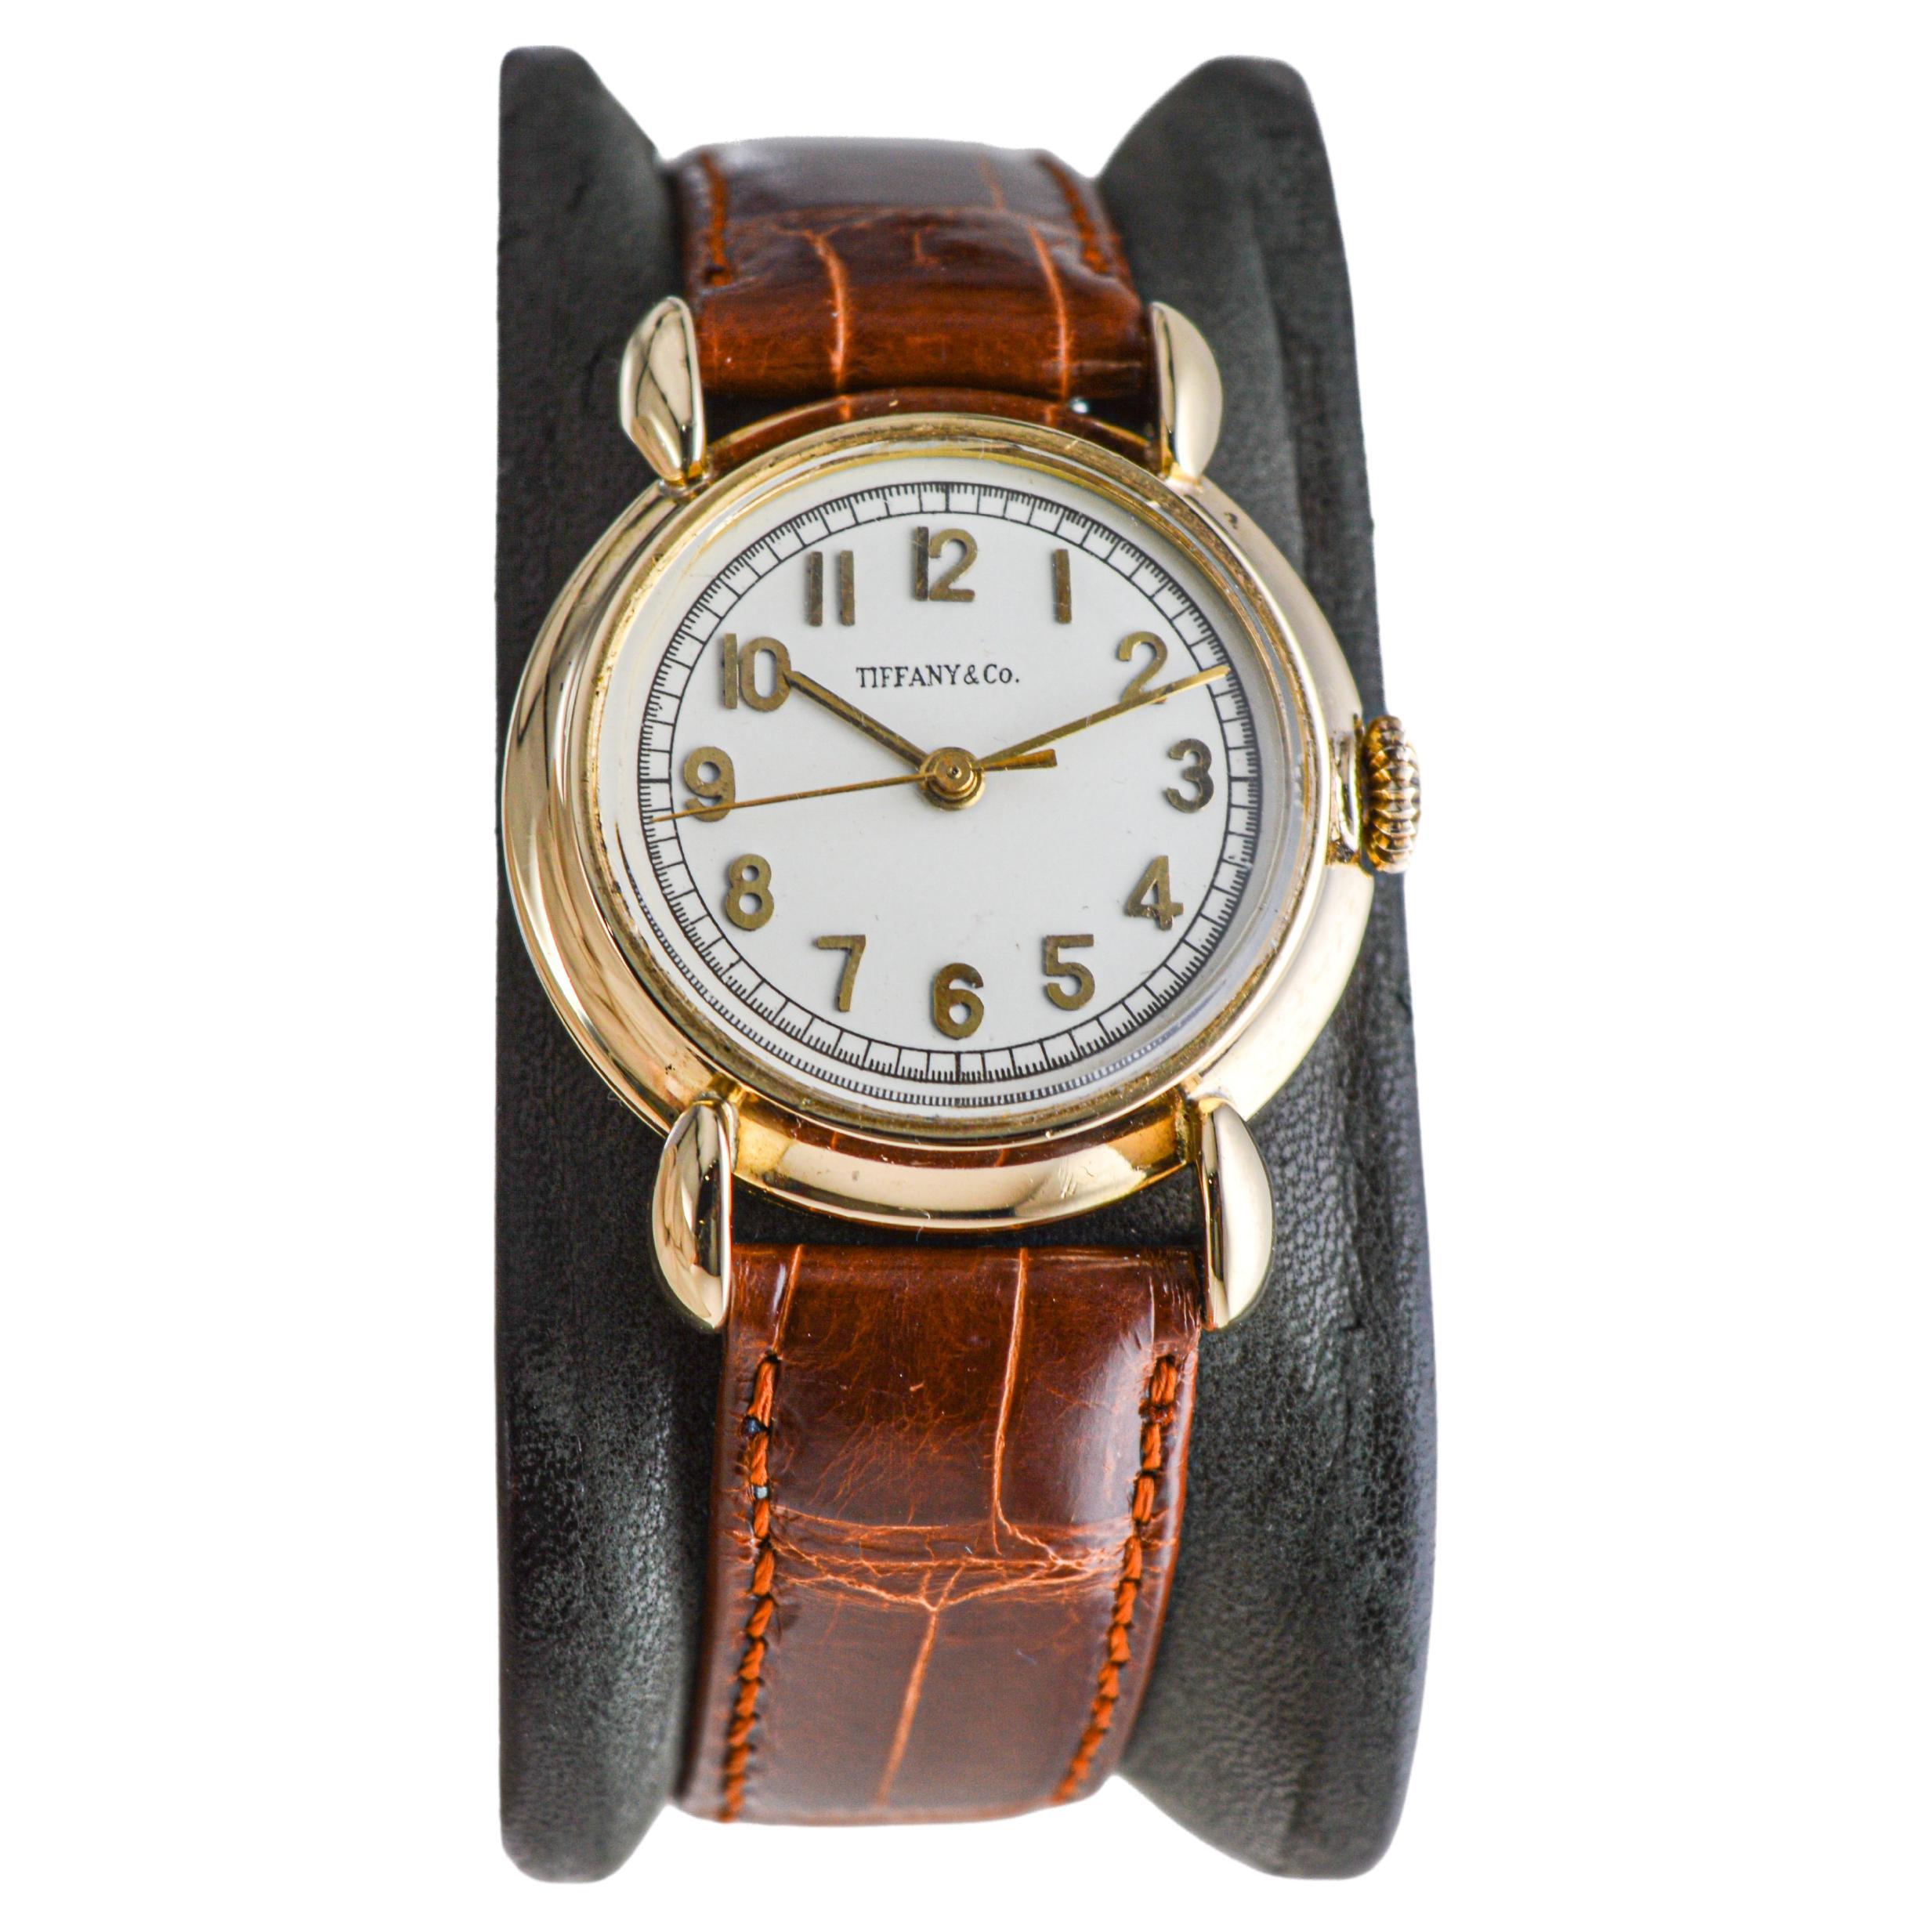 Tiffany & Co. by Schaffhausen International Watch Company Art Deco Style Watch For Sale 2